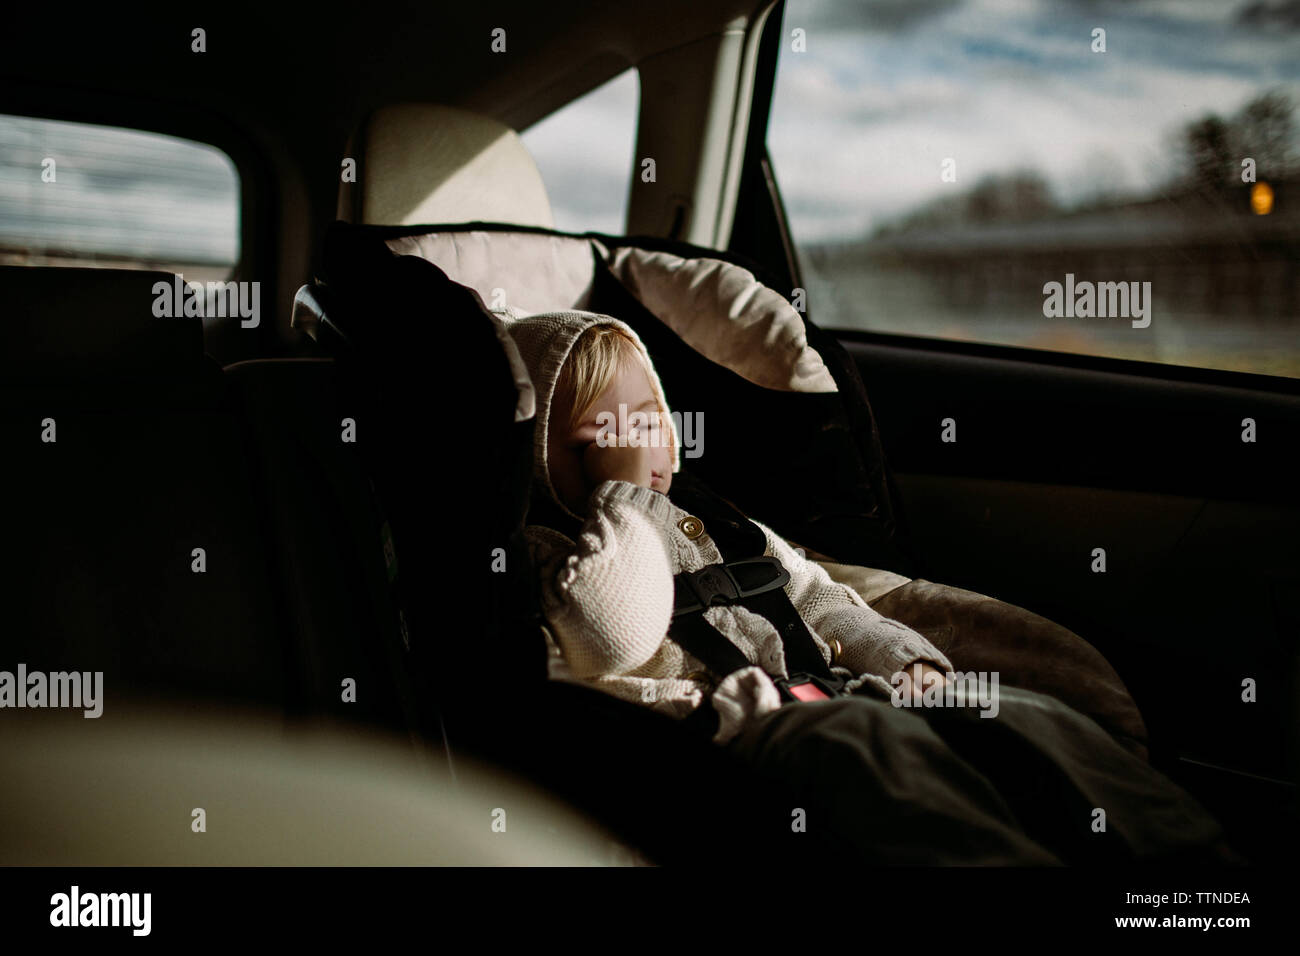 Toddler rubbing her eye, asleep in carseat, driving through city Stock Photo